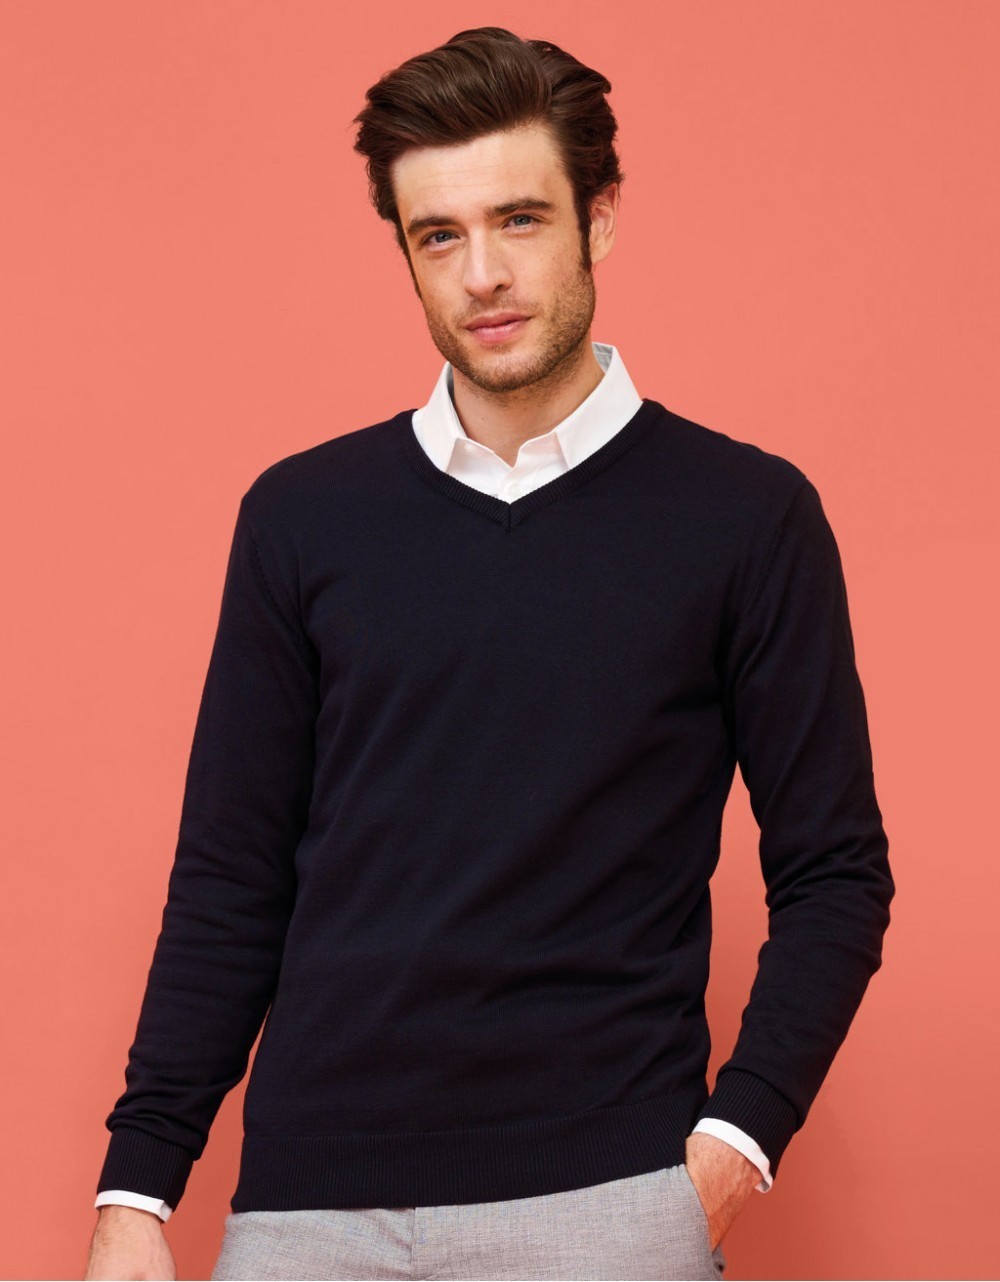 Sweatshirts > Galaxy Pullover - V-neck sweater